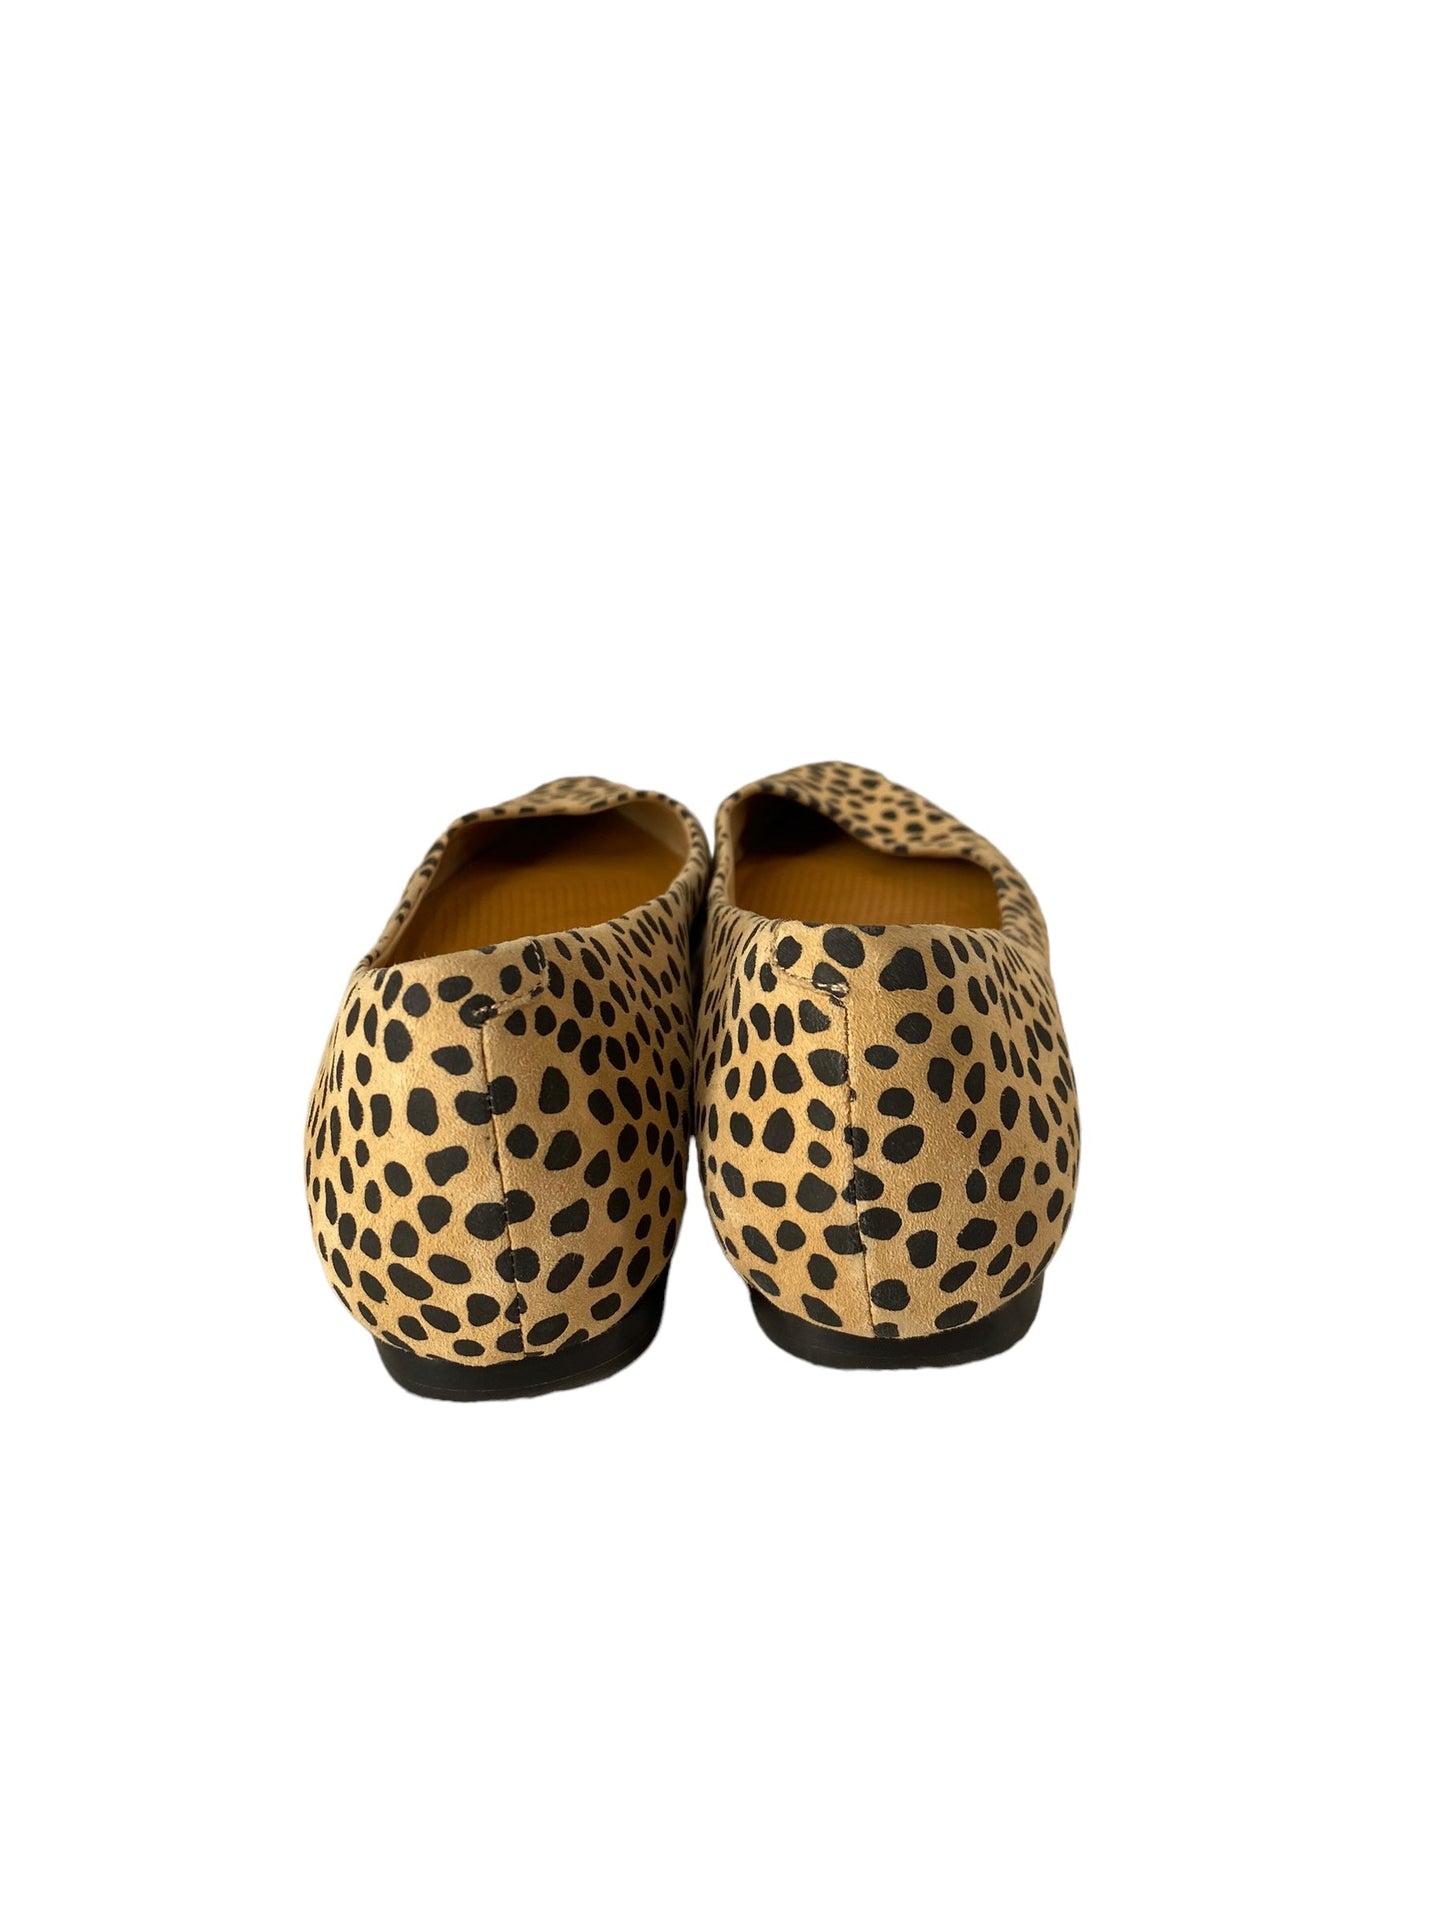 Animal Print Shoes Flats Corso Como, Size 8